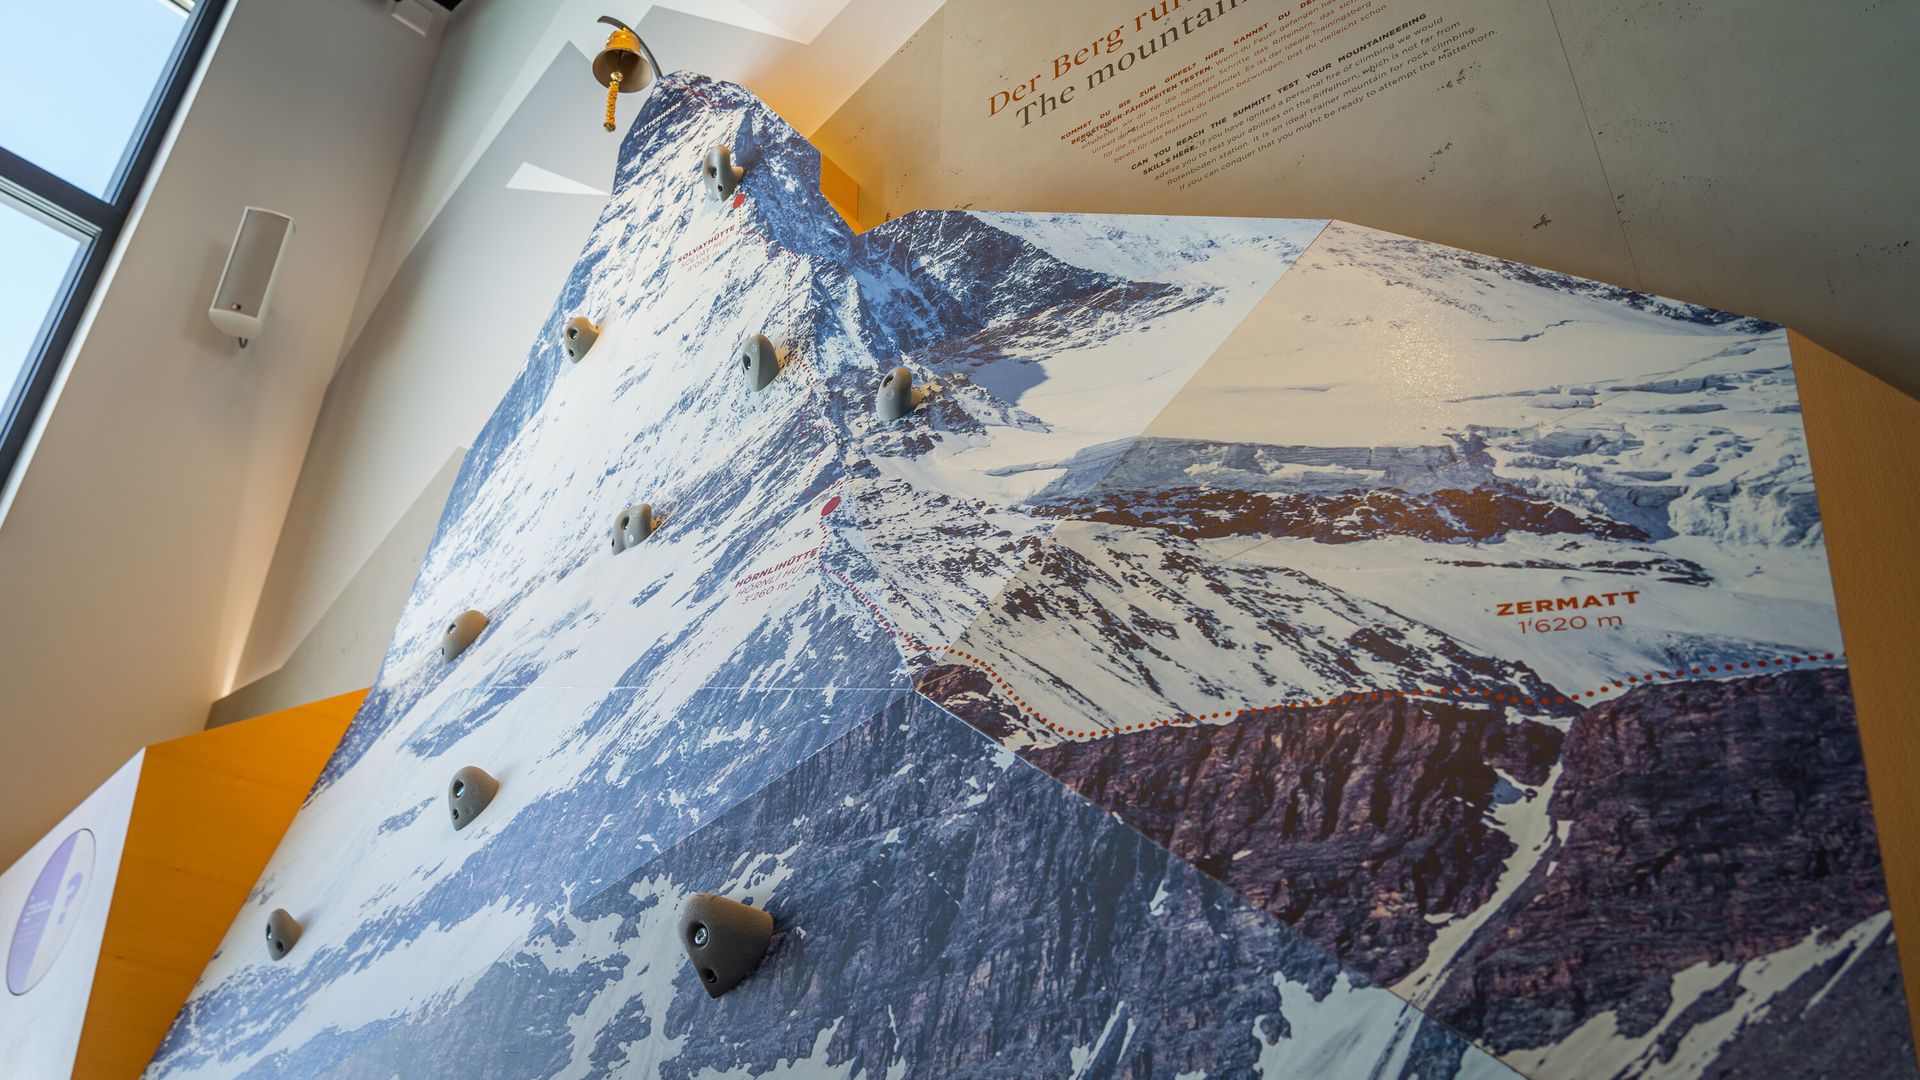 Climbing wall at the Zooom the Matterhorn exhibition on the Gornergrat in Zermatt 